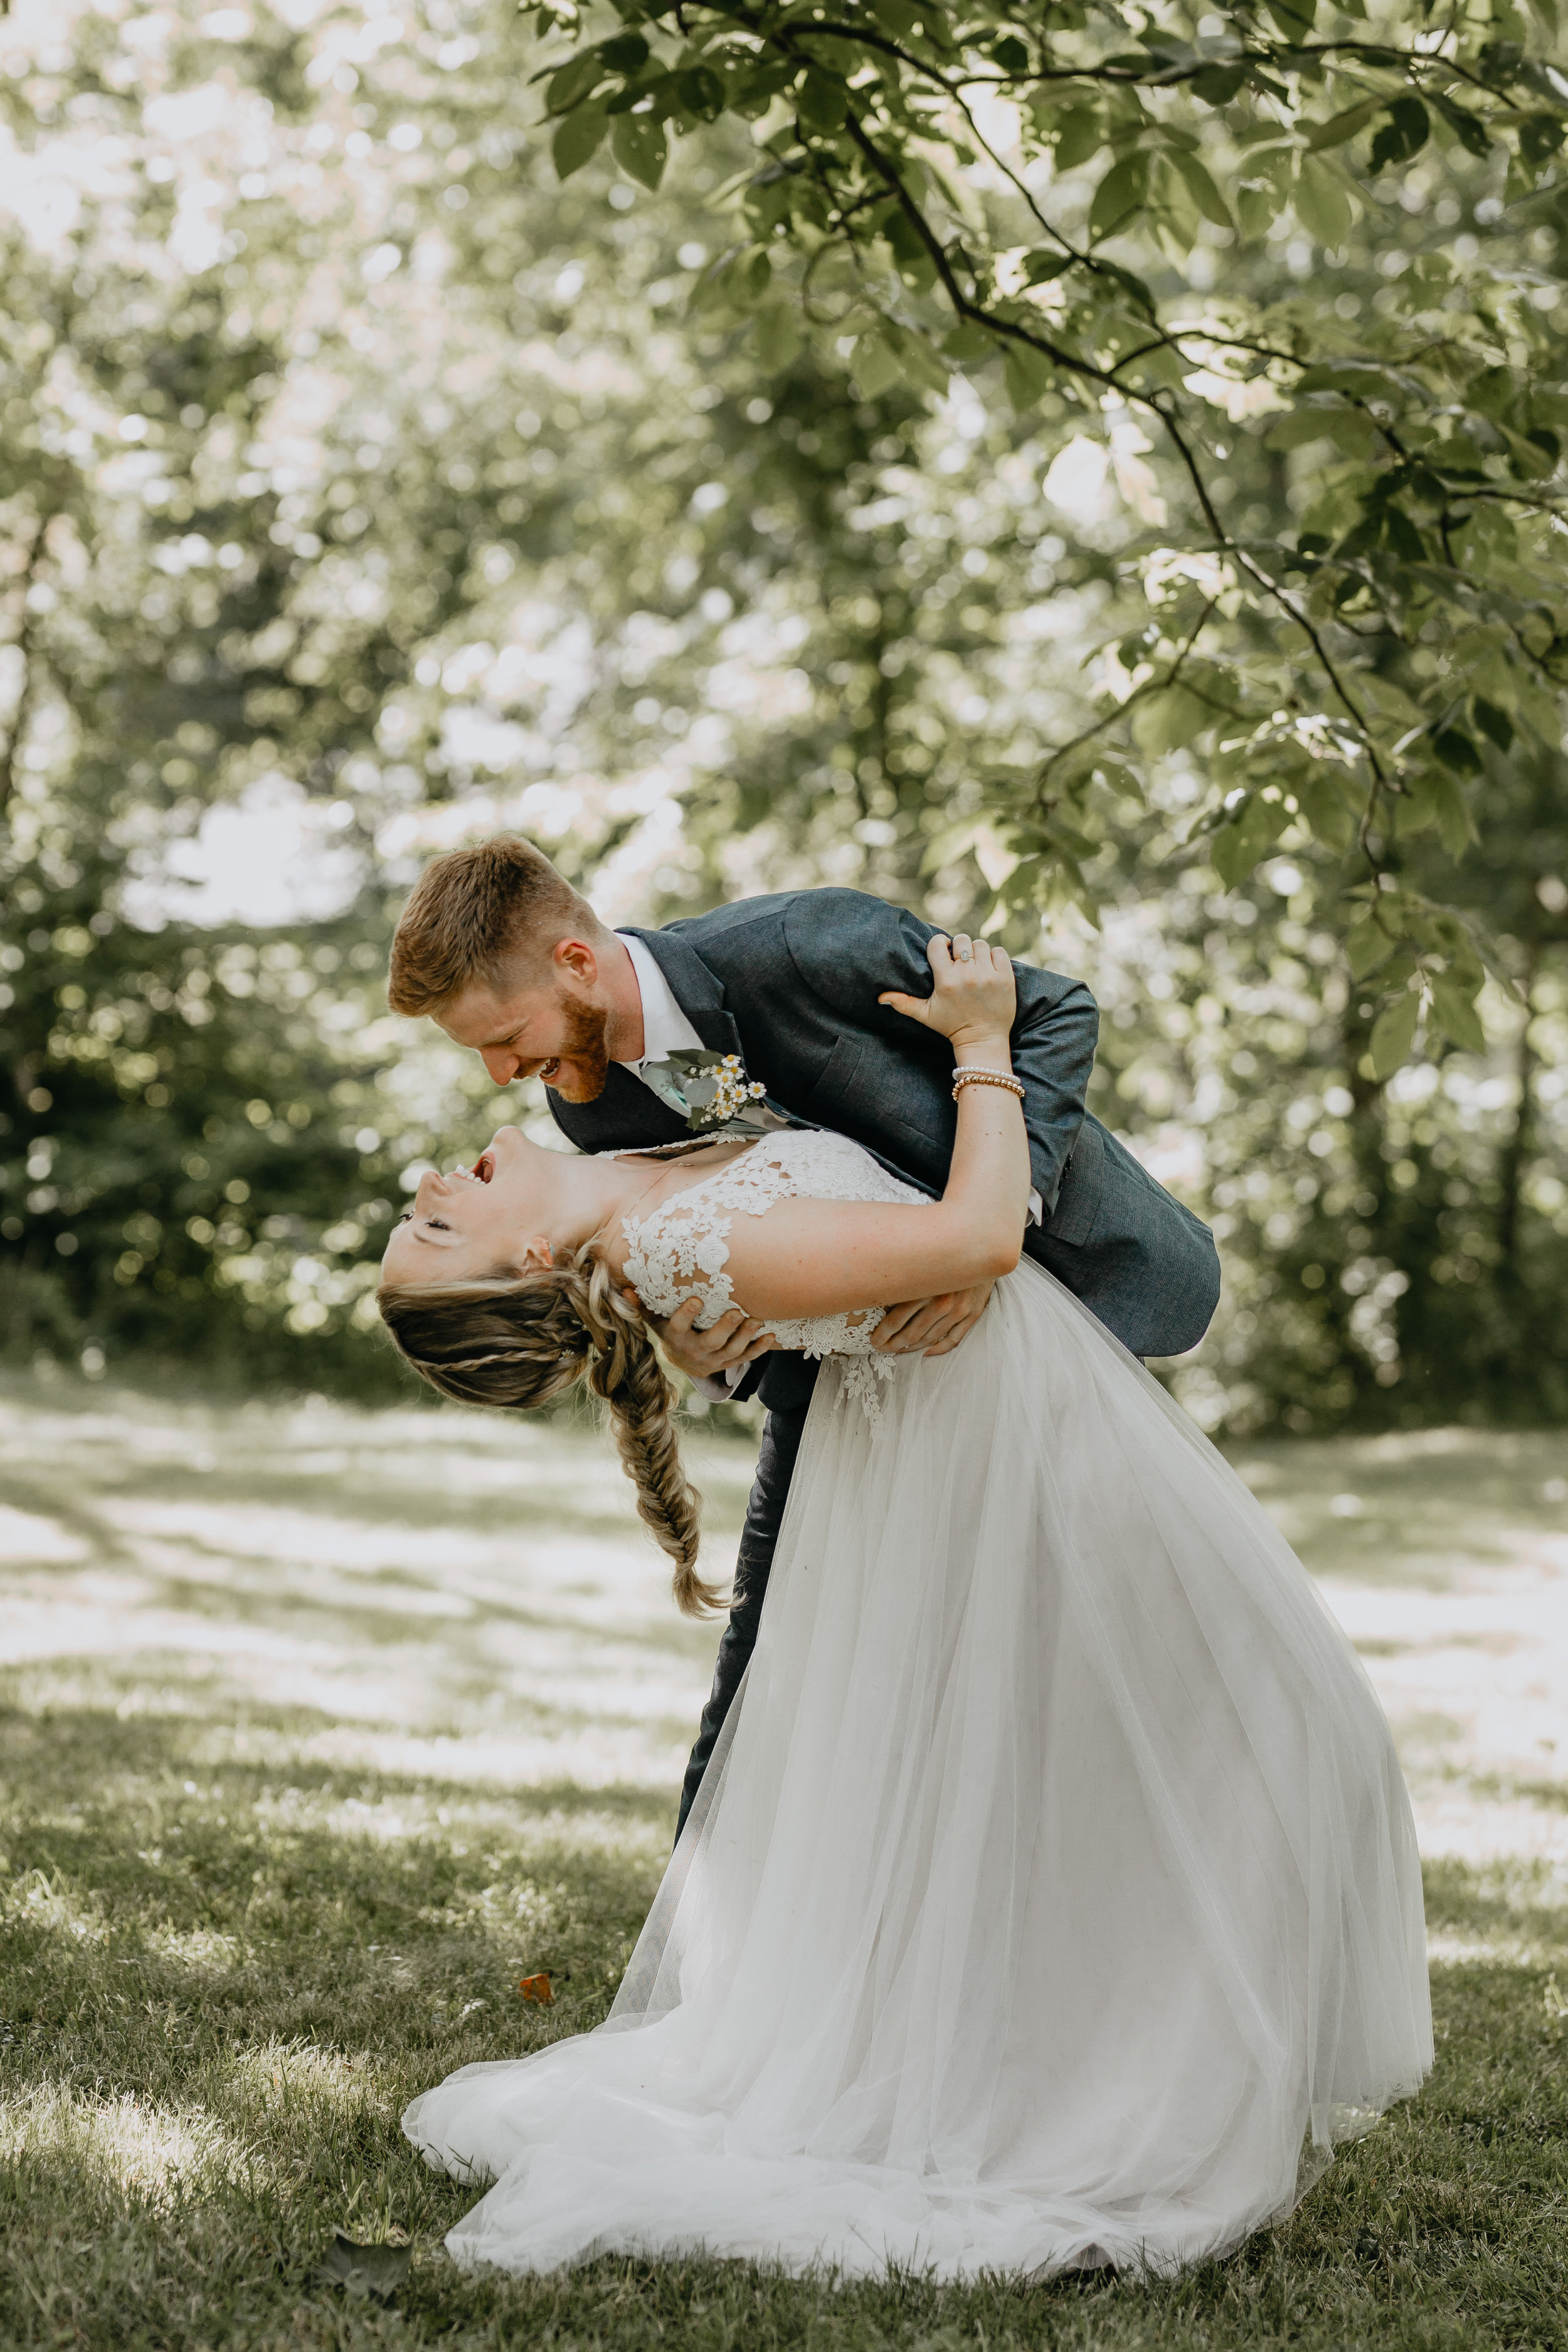 Nicole-Daacke-Photography-pennsylvania-laid-back-outside-backyard-wedding-family-summer-june-maryland-barefoot-bride-woodland-trees-sunset-couple-22.jpg